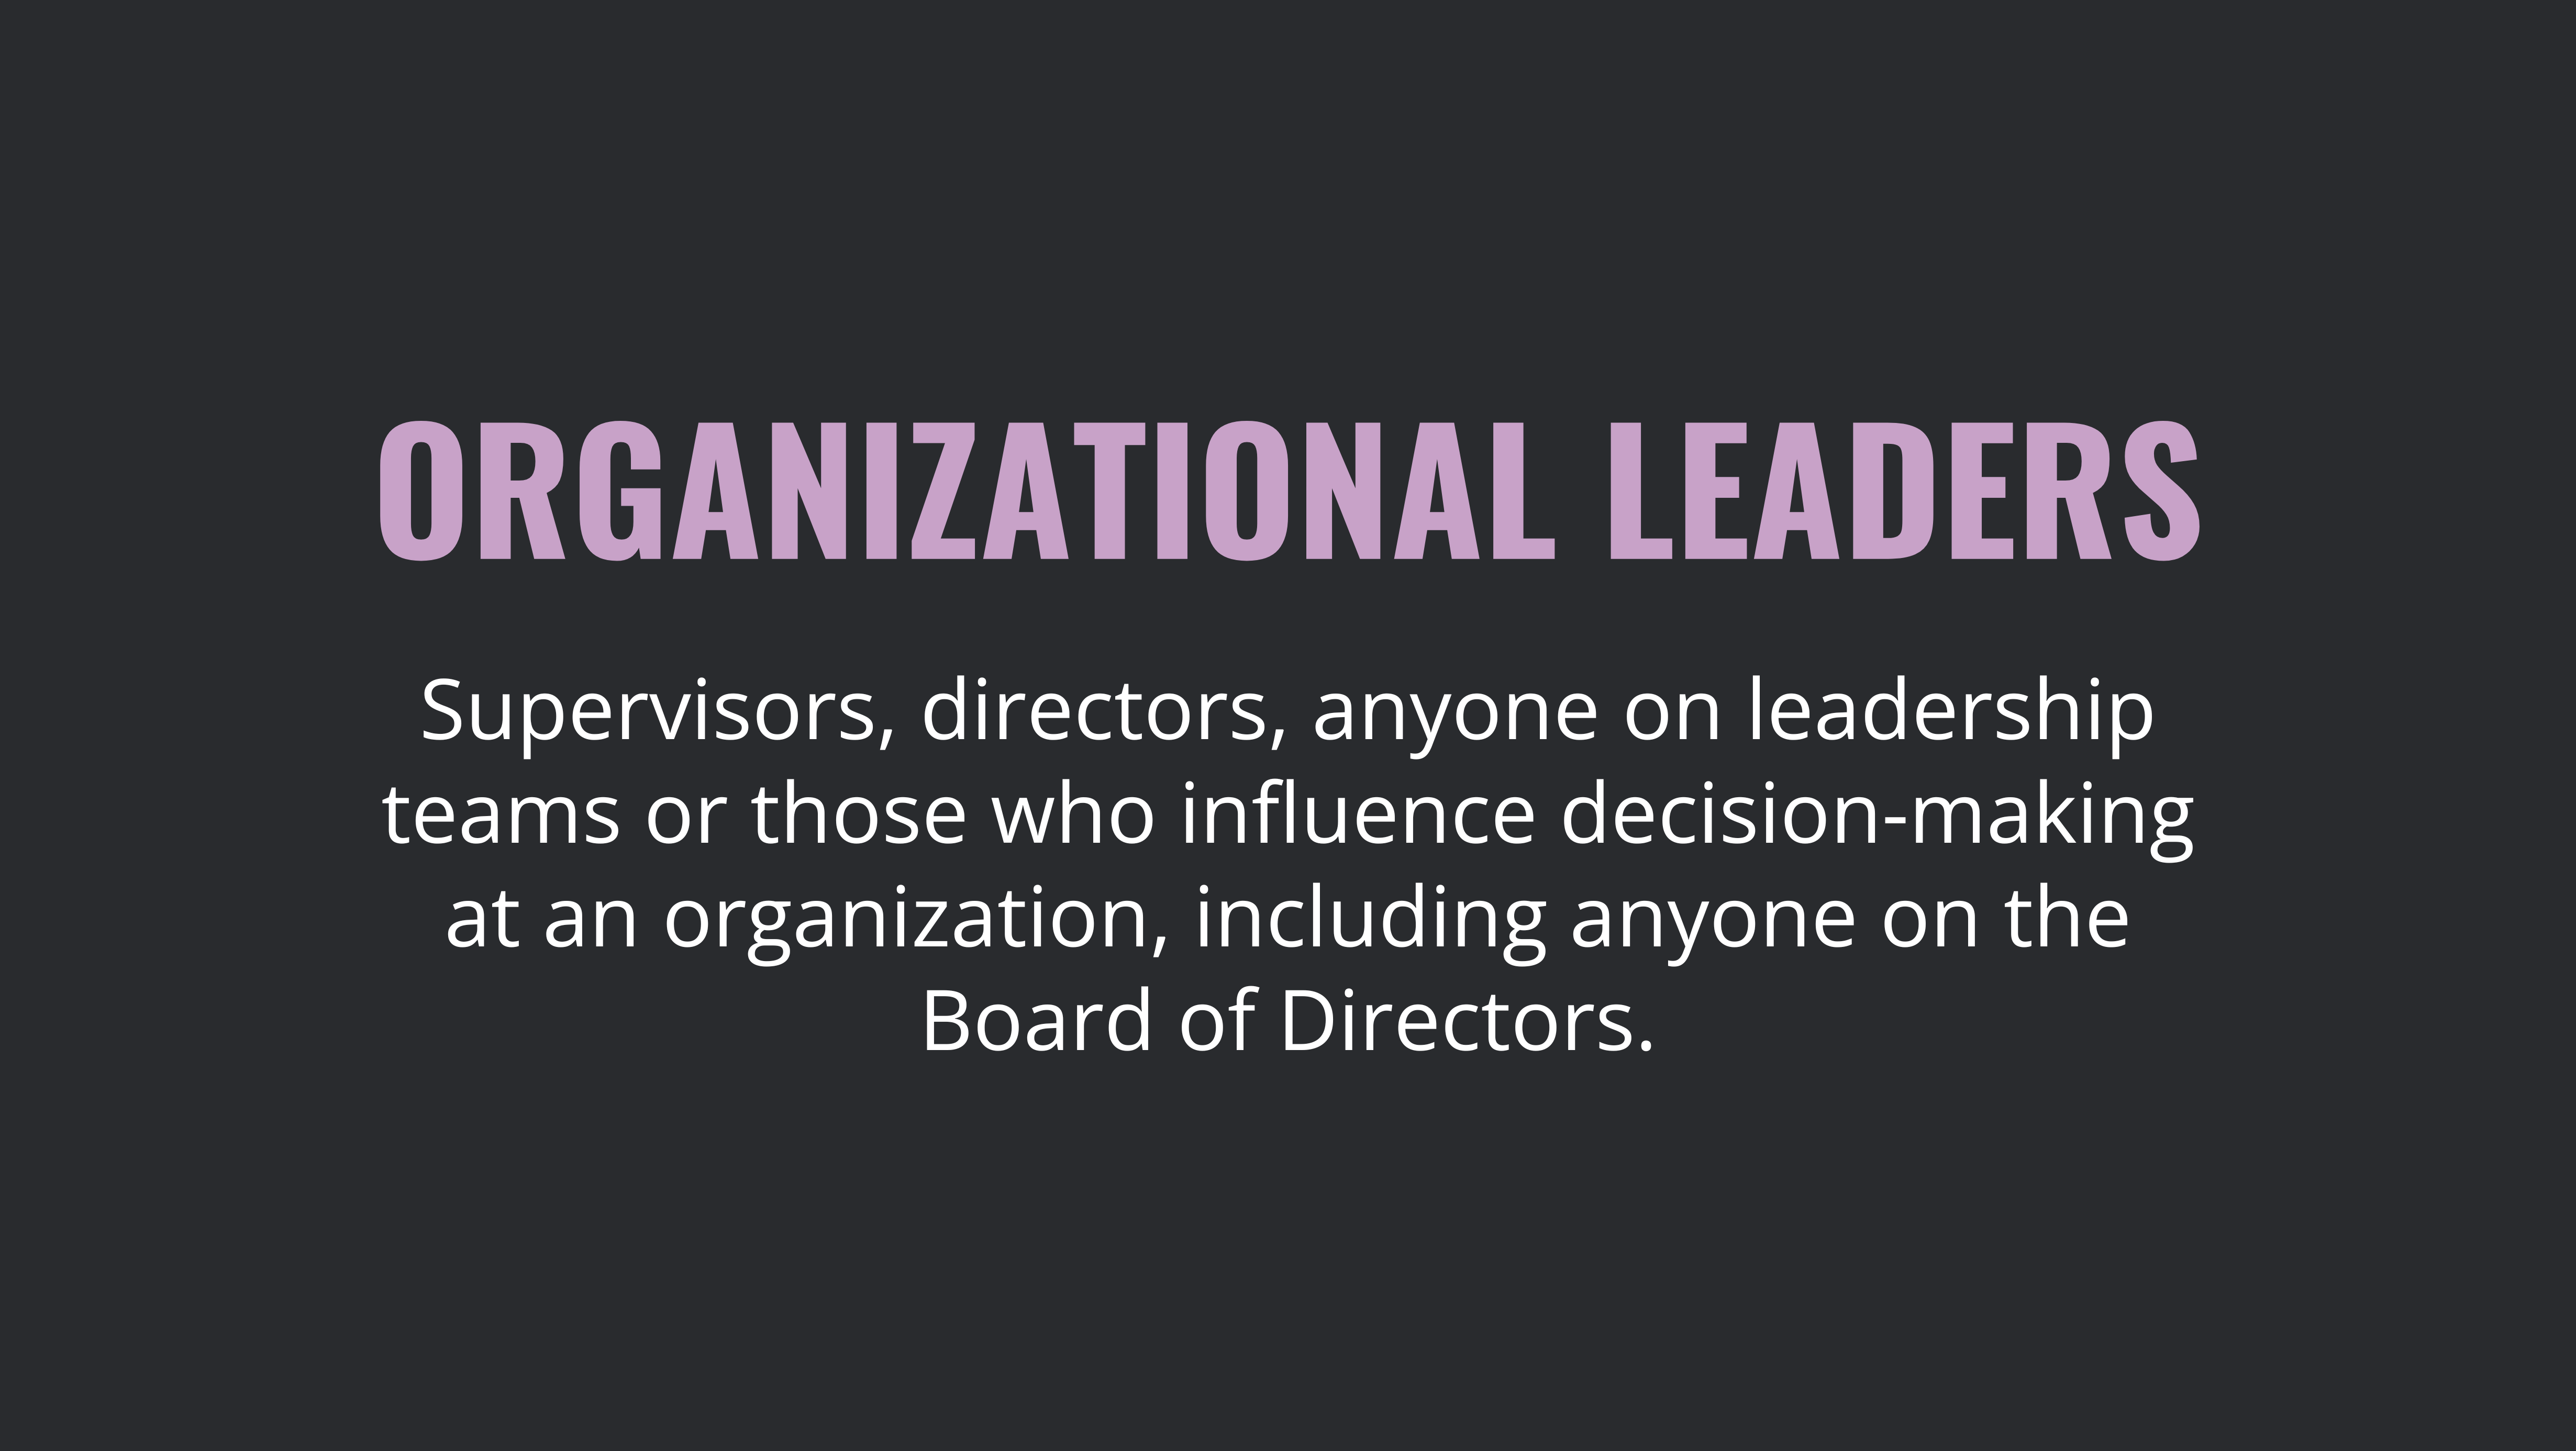 ORGANIZATIONAL LEADERS